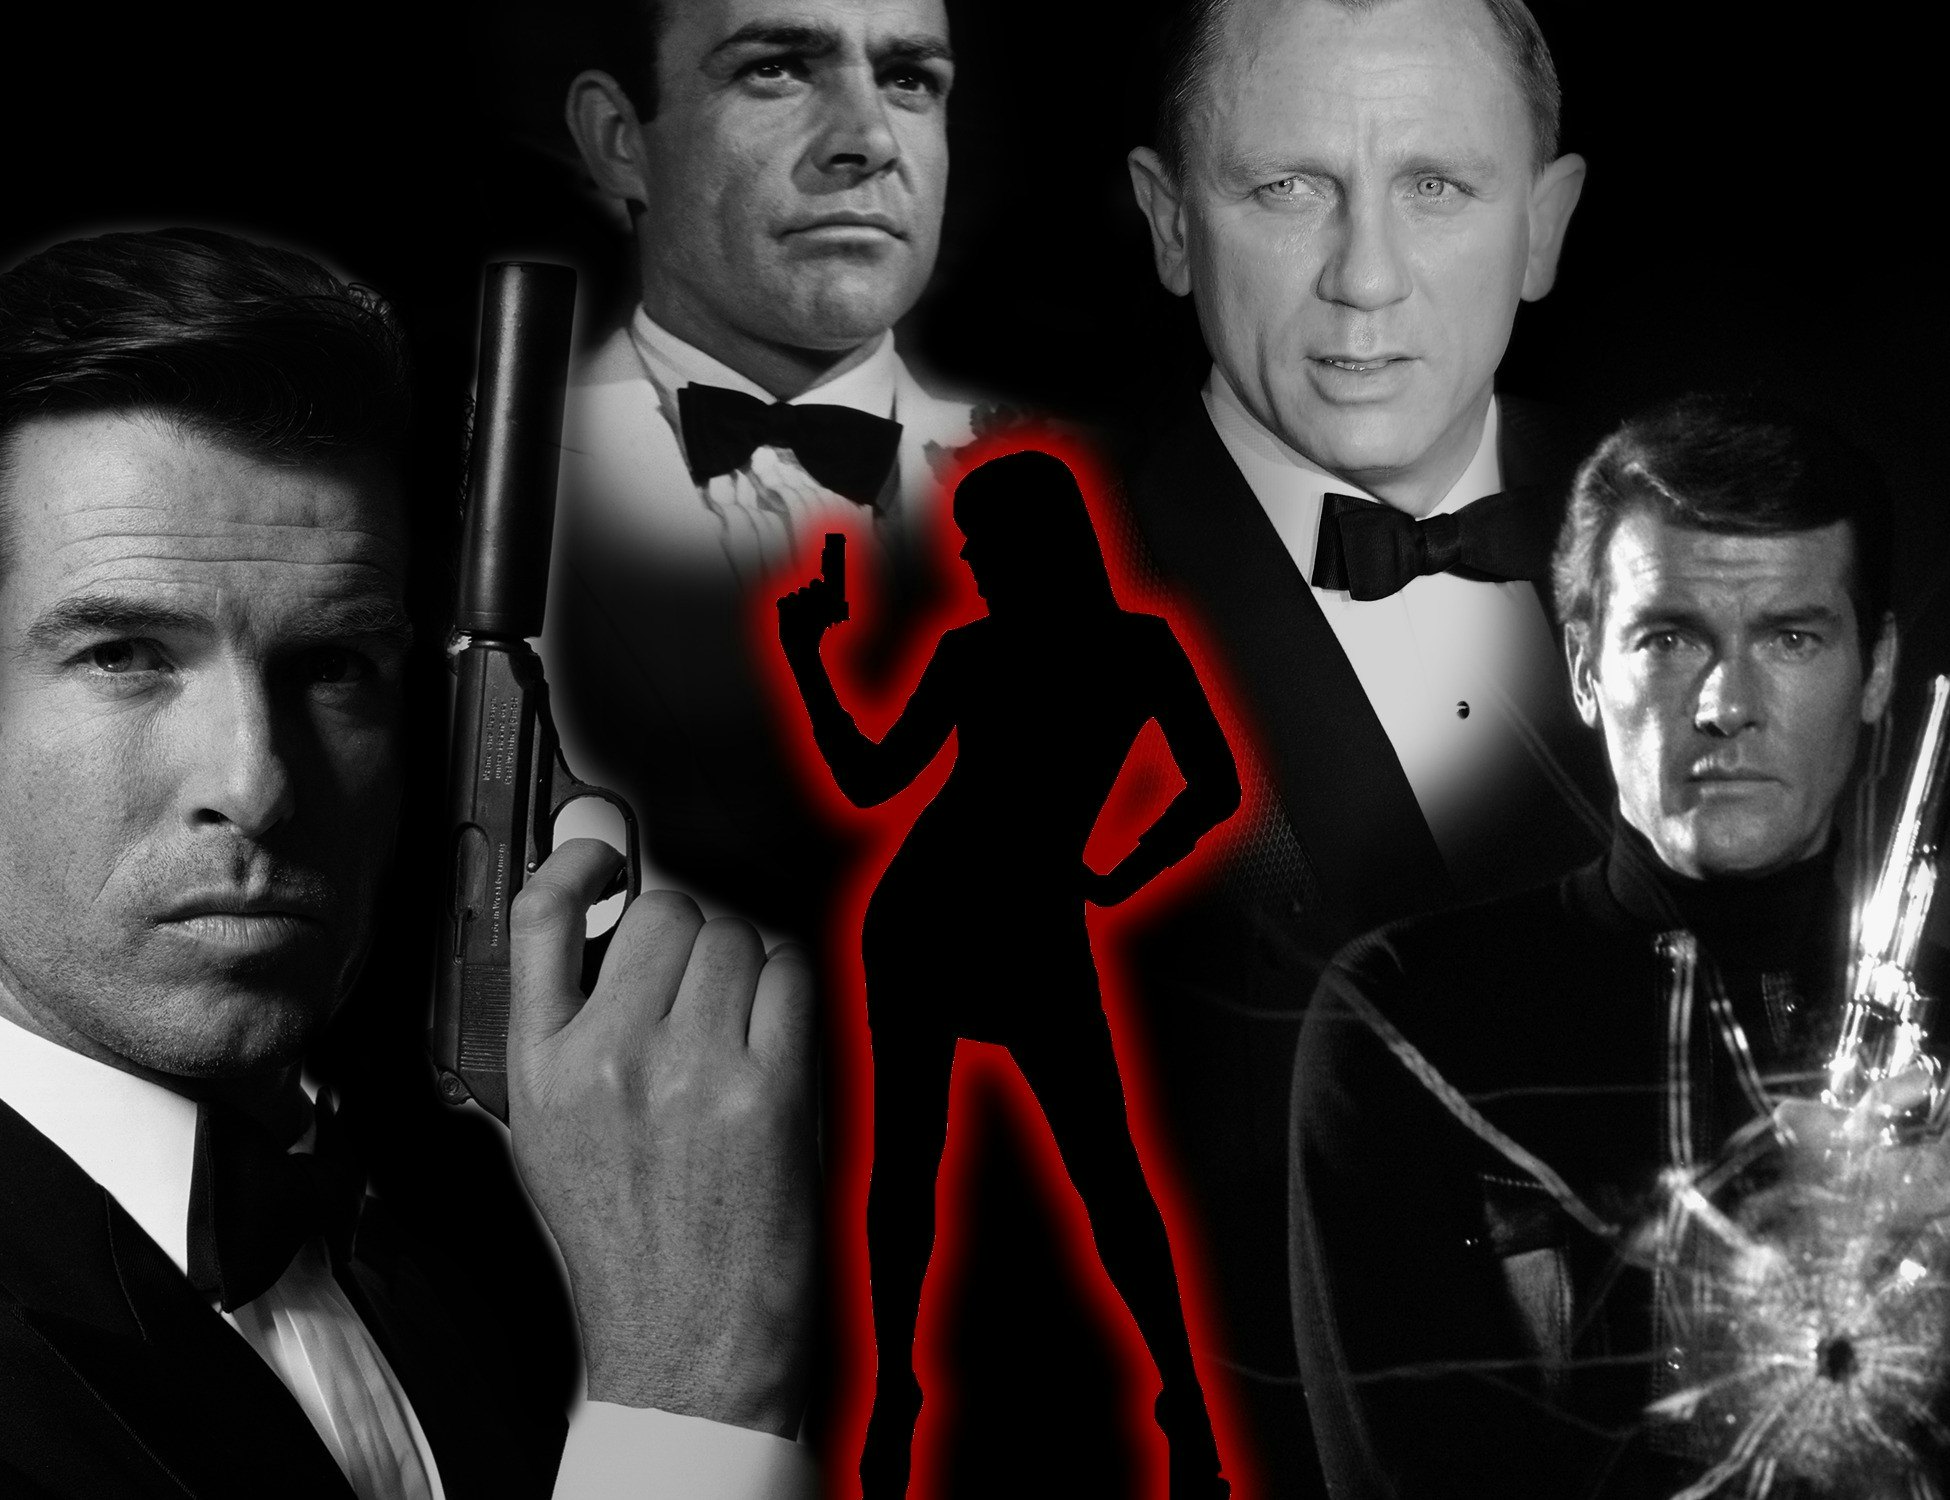 Woman silhouette = 007 James Bond Films 1-10